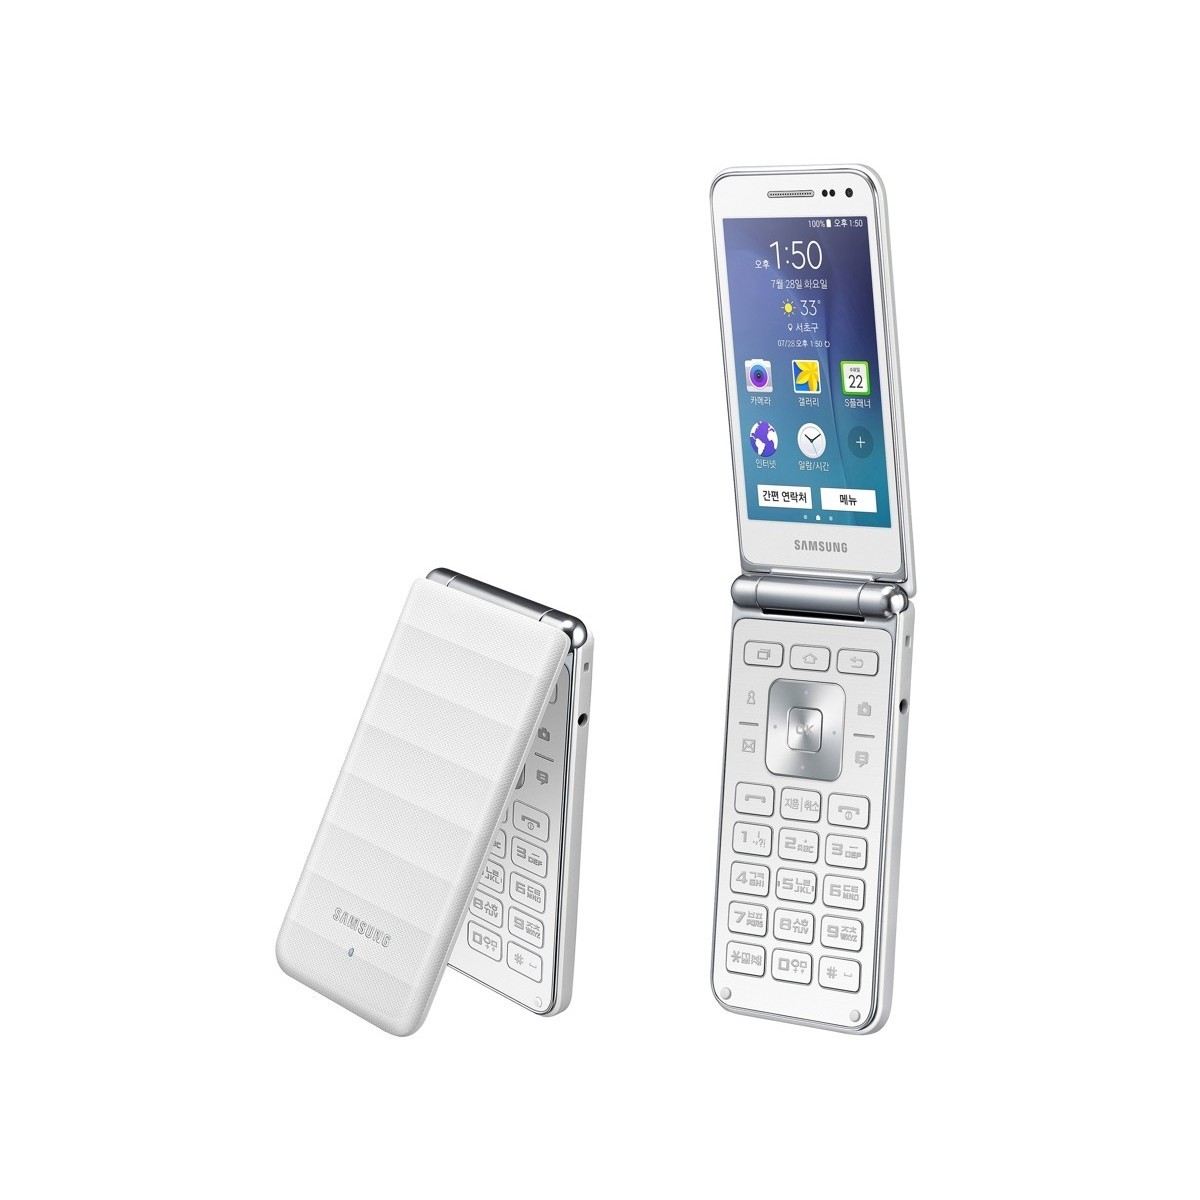 Samsung Galaxy Folder 2 Sm G1650 Купить